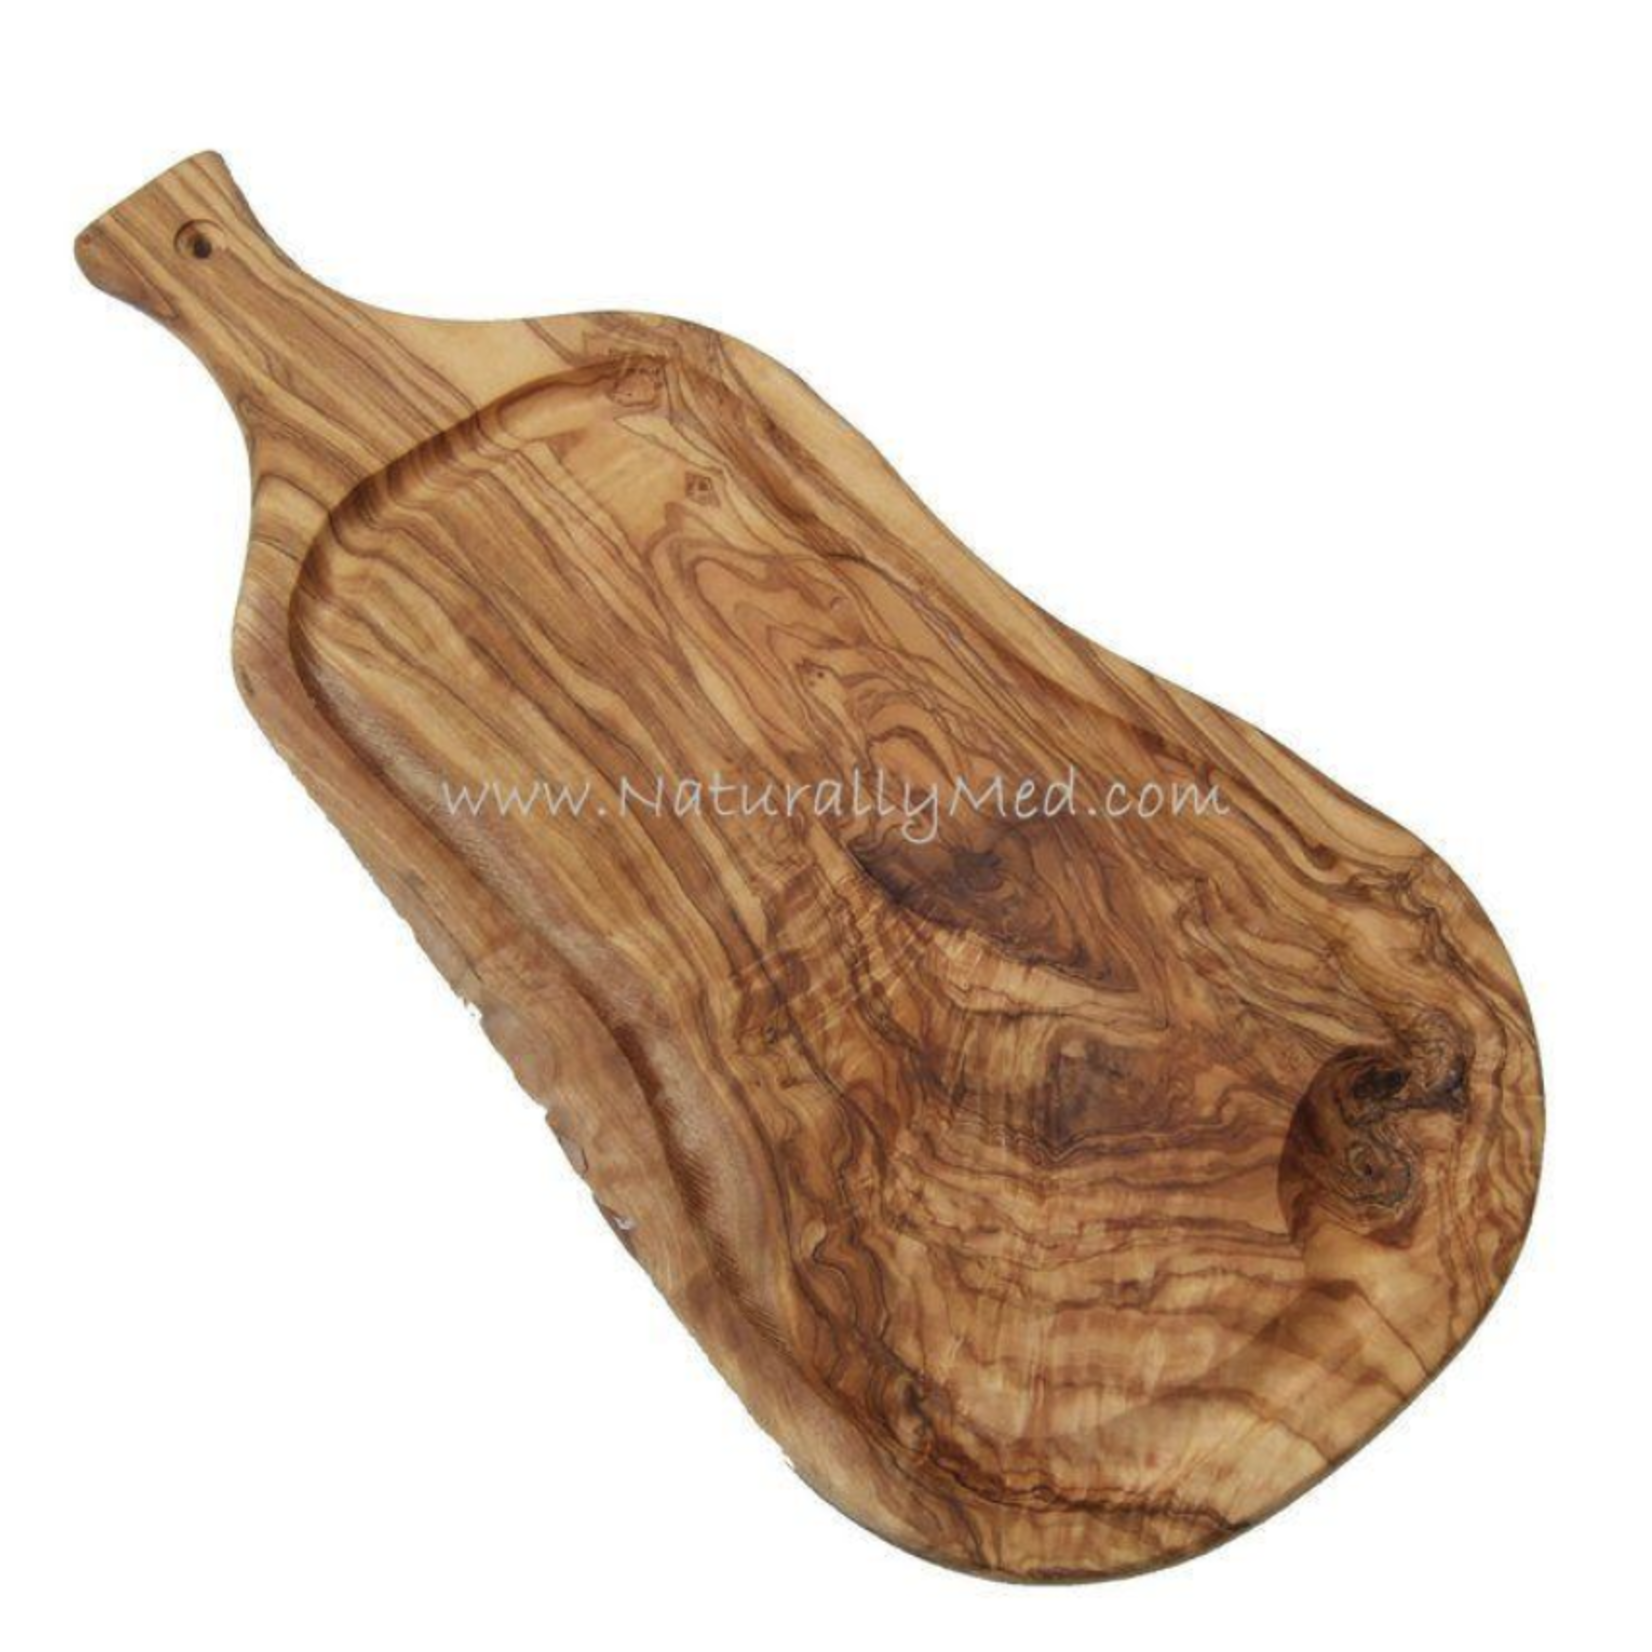 https://cdn.shoplightspeed.com/shops/631982/files/50792328/1652x1652x1/naturally-med-olive-wood-carving-board-steak-board.jpg